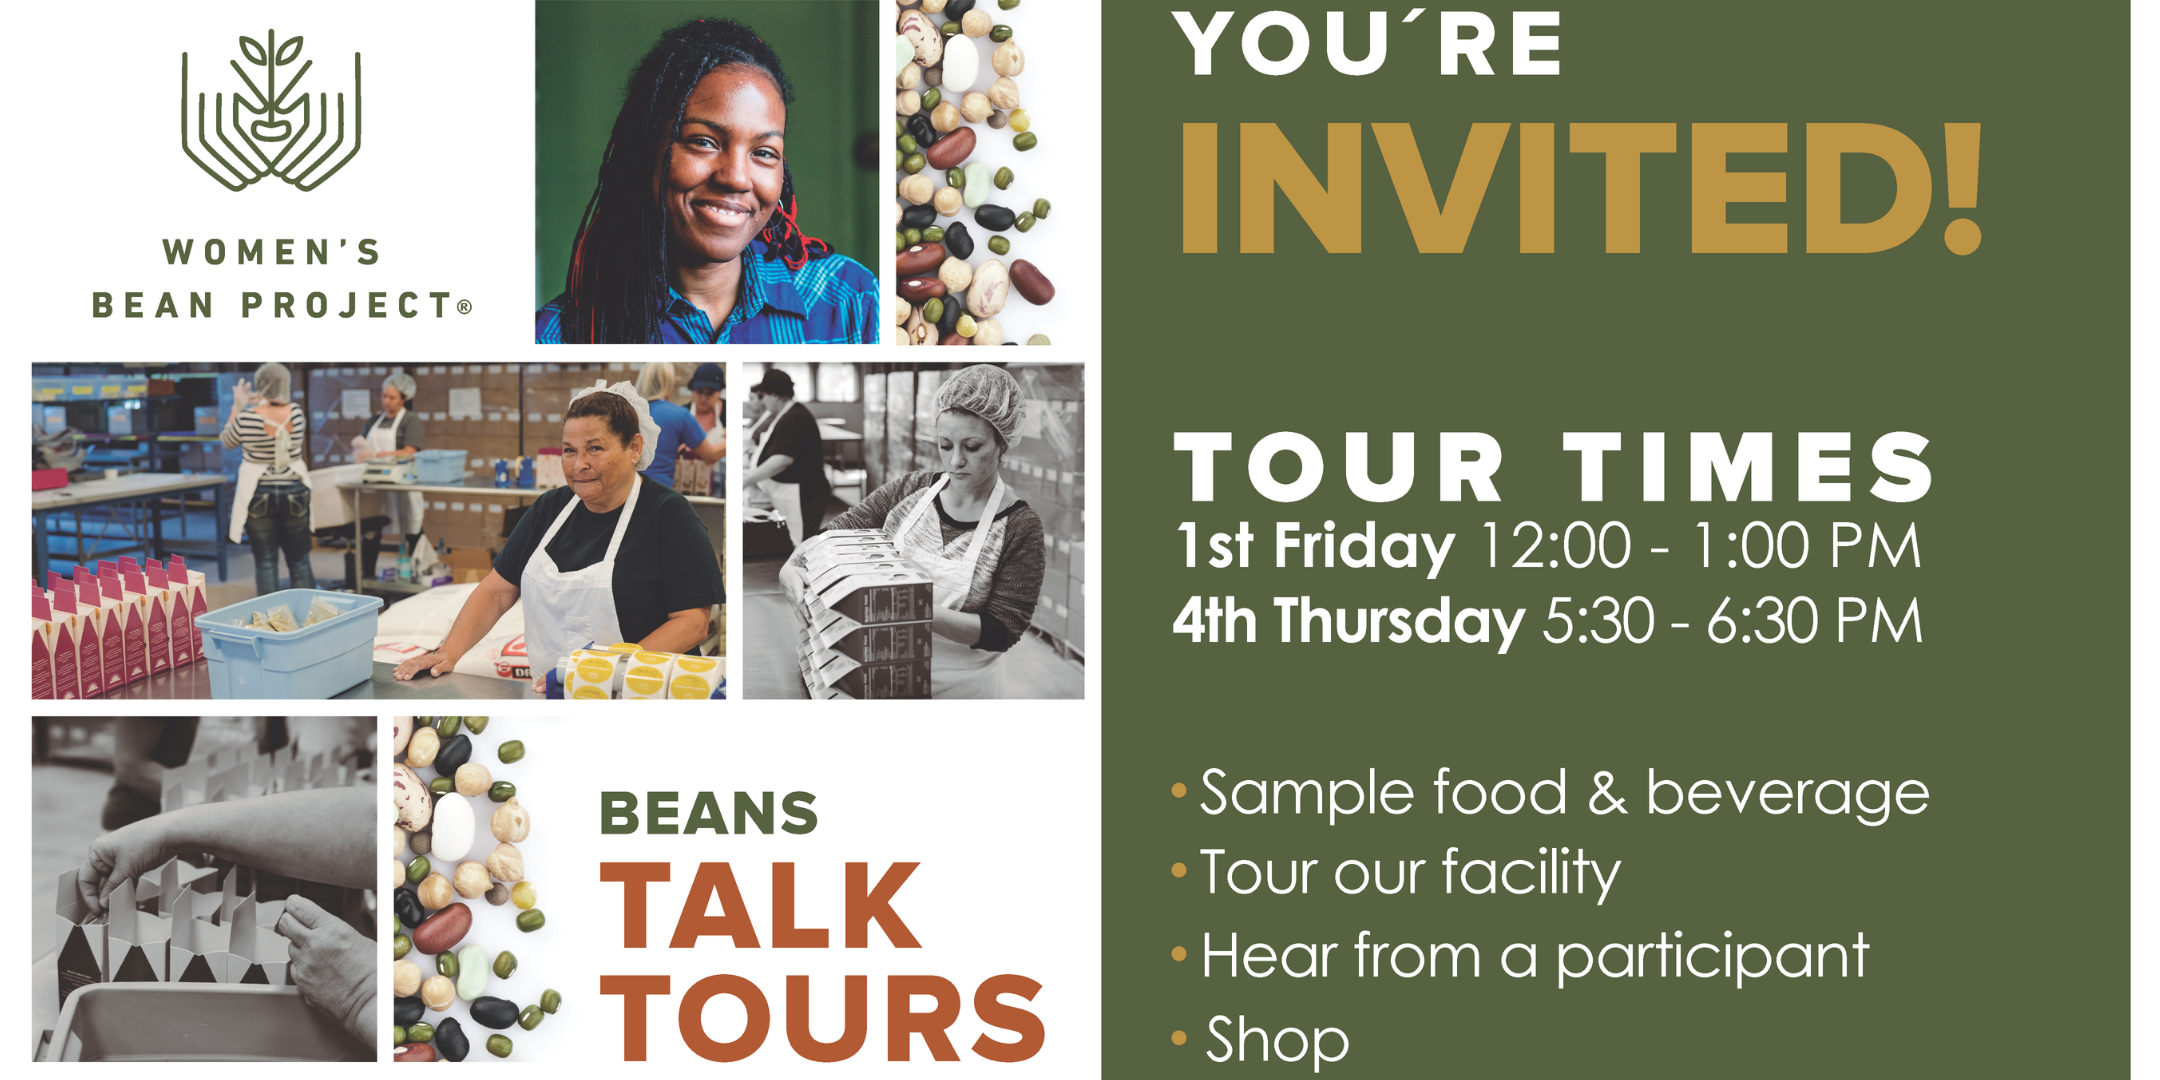 Women's Bean Project Tour - FREE